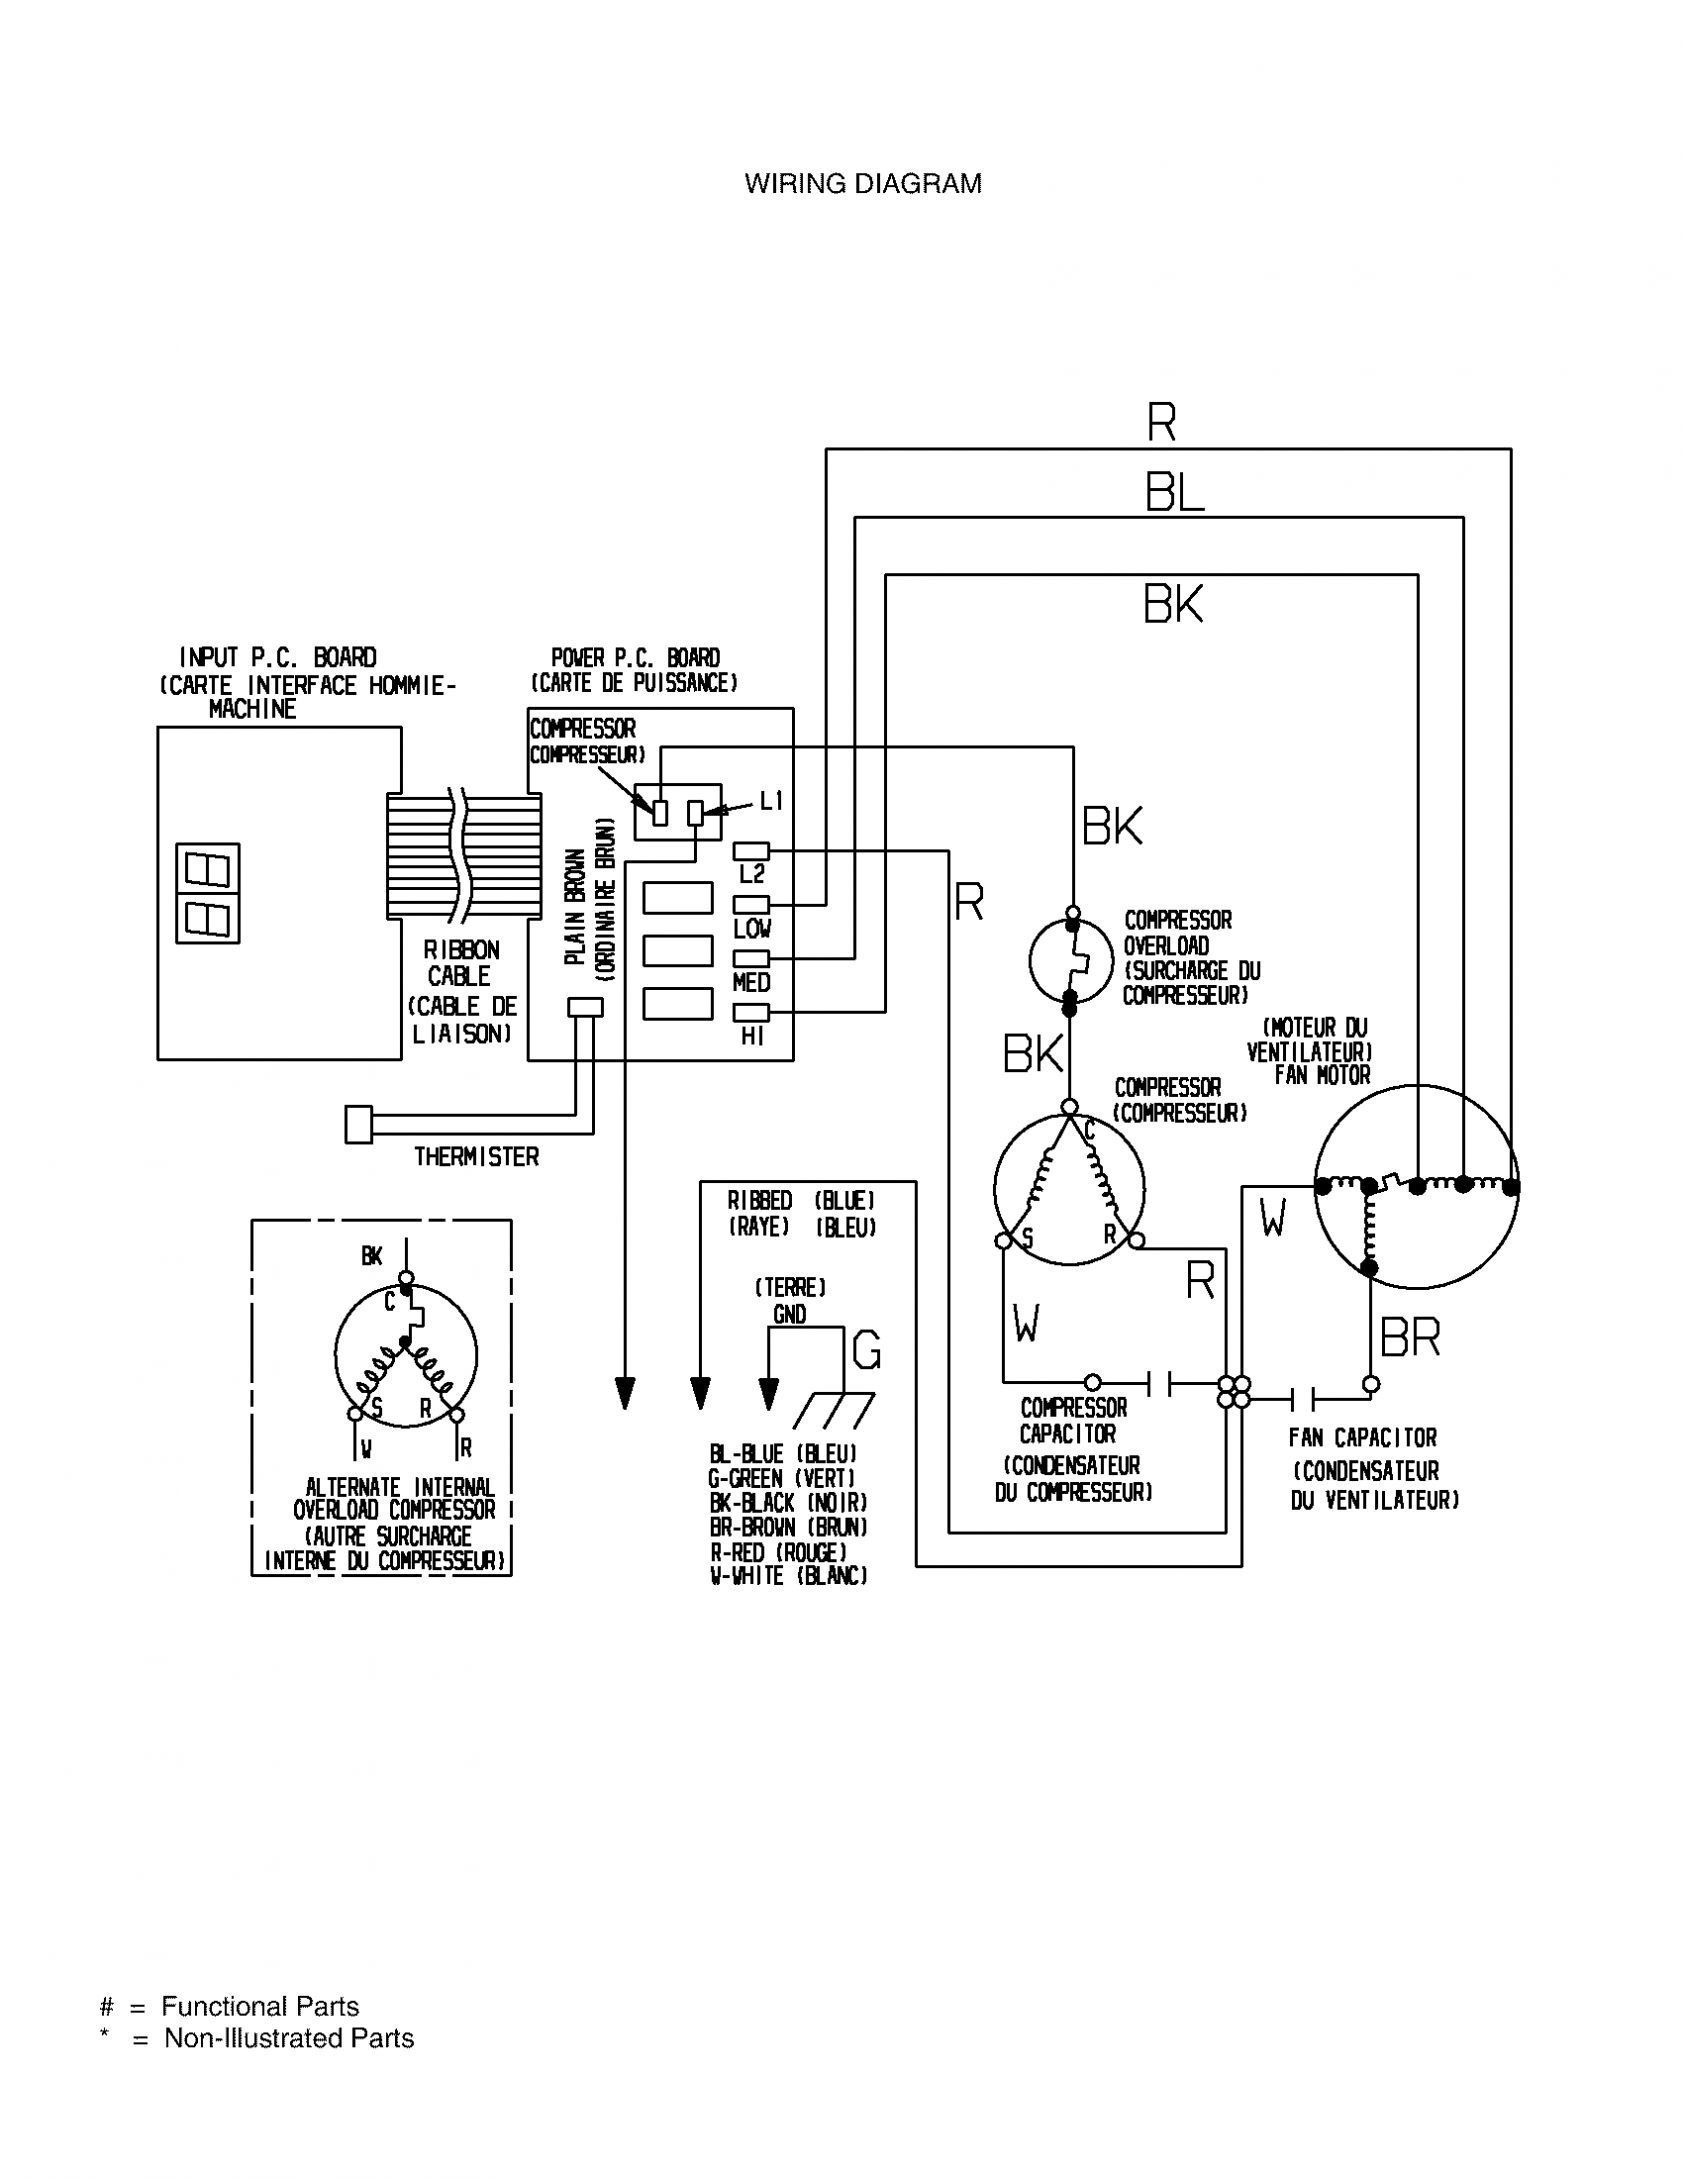 air conditioner wiring diagram picture inspirational audi a4 air rh citruscyclecenter audi a4 8e wiring diagram audi a4 b7 wiring diagram